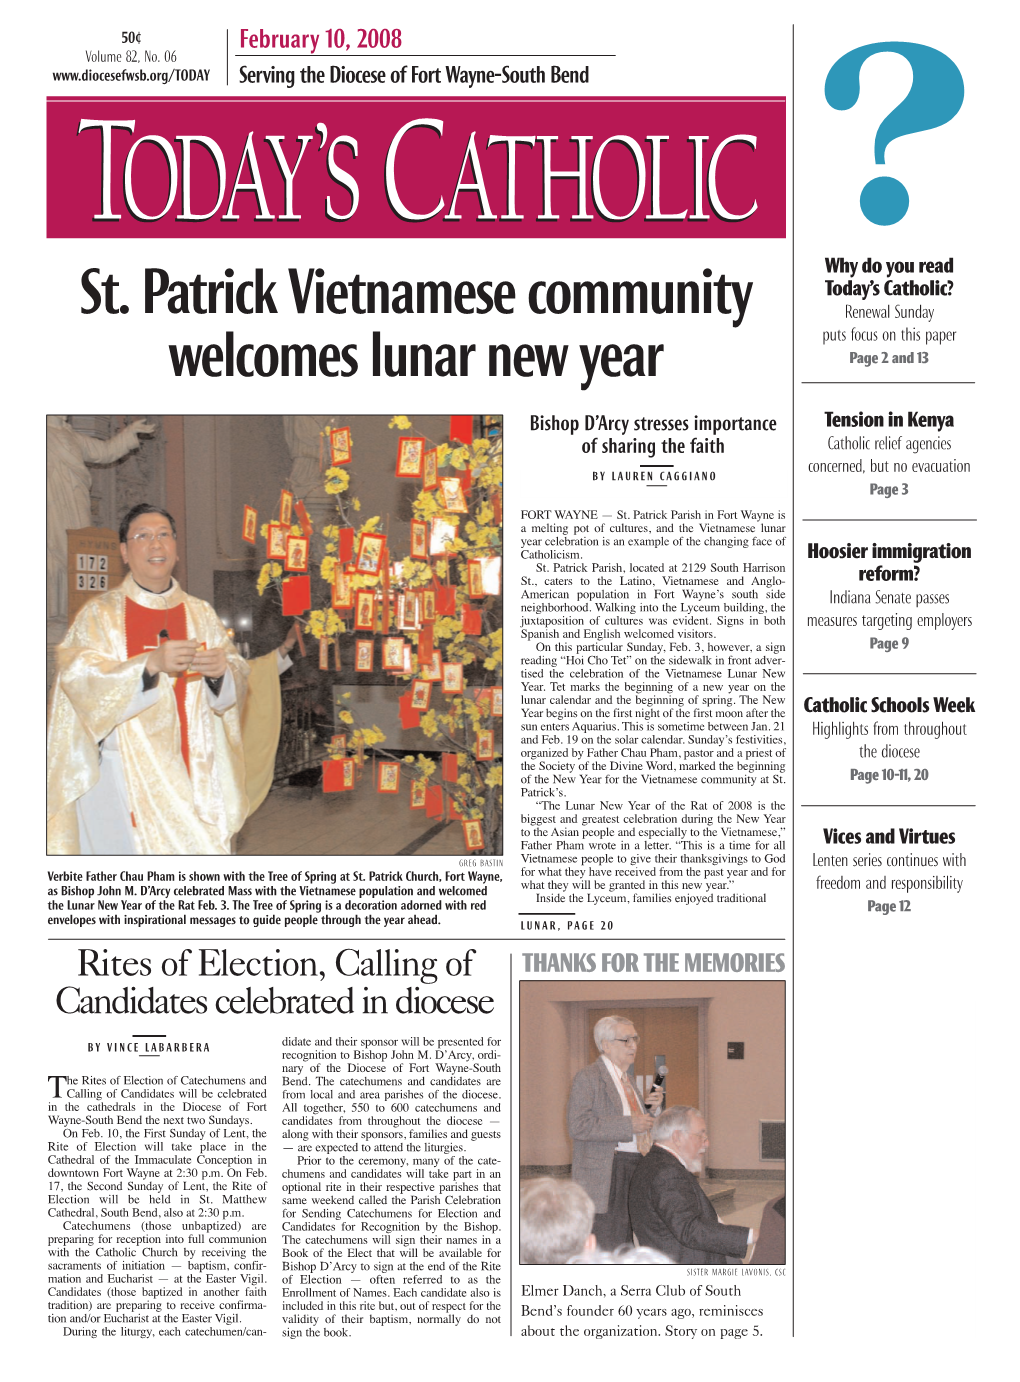 St. Patrick Vietnamese Community Welcomes Lunar New Year